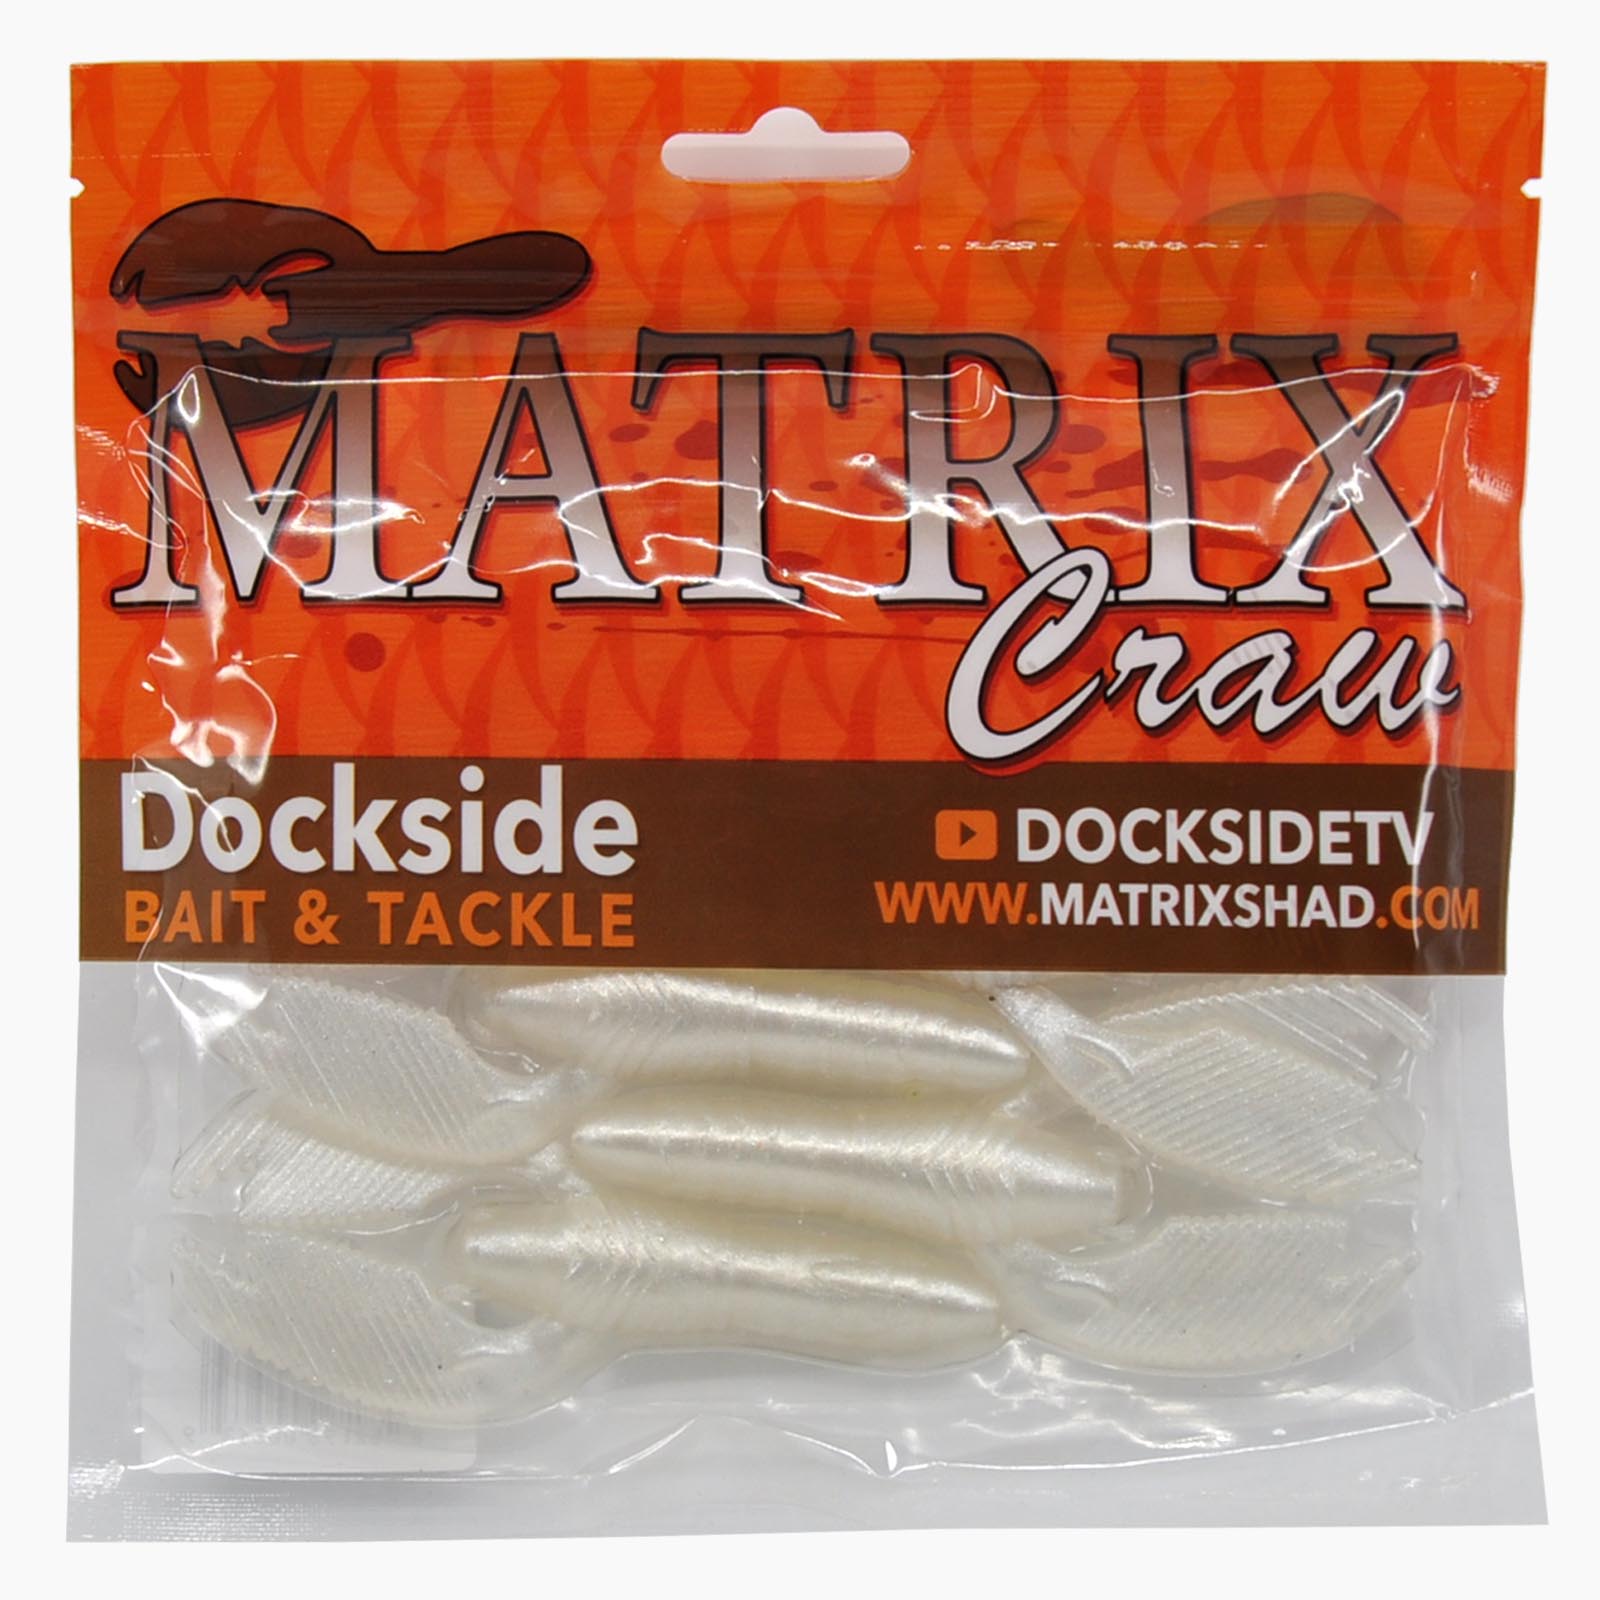 Matrix Craw Soft Plastic Crawfish – Tackle Room